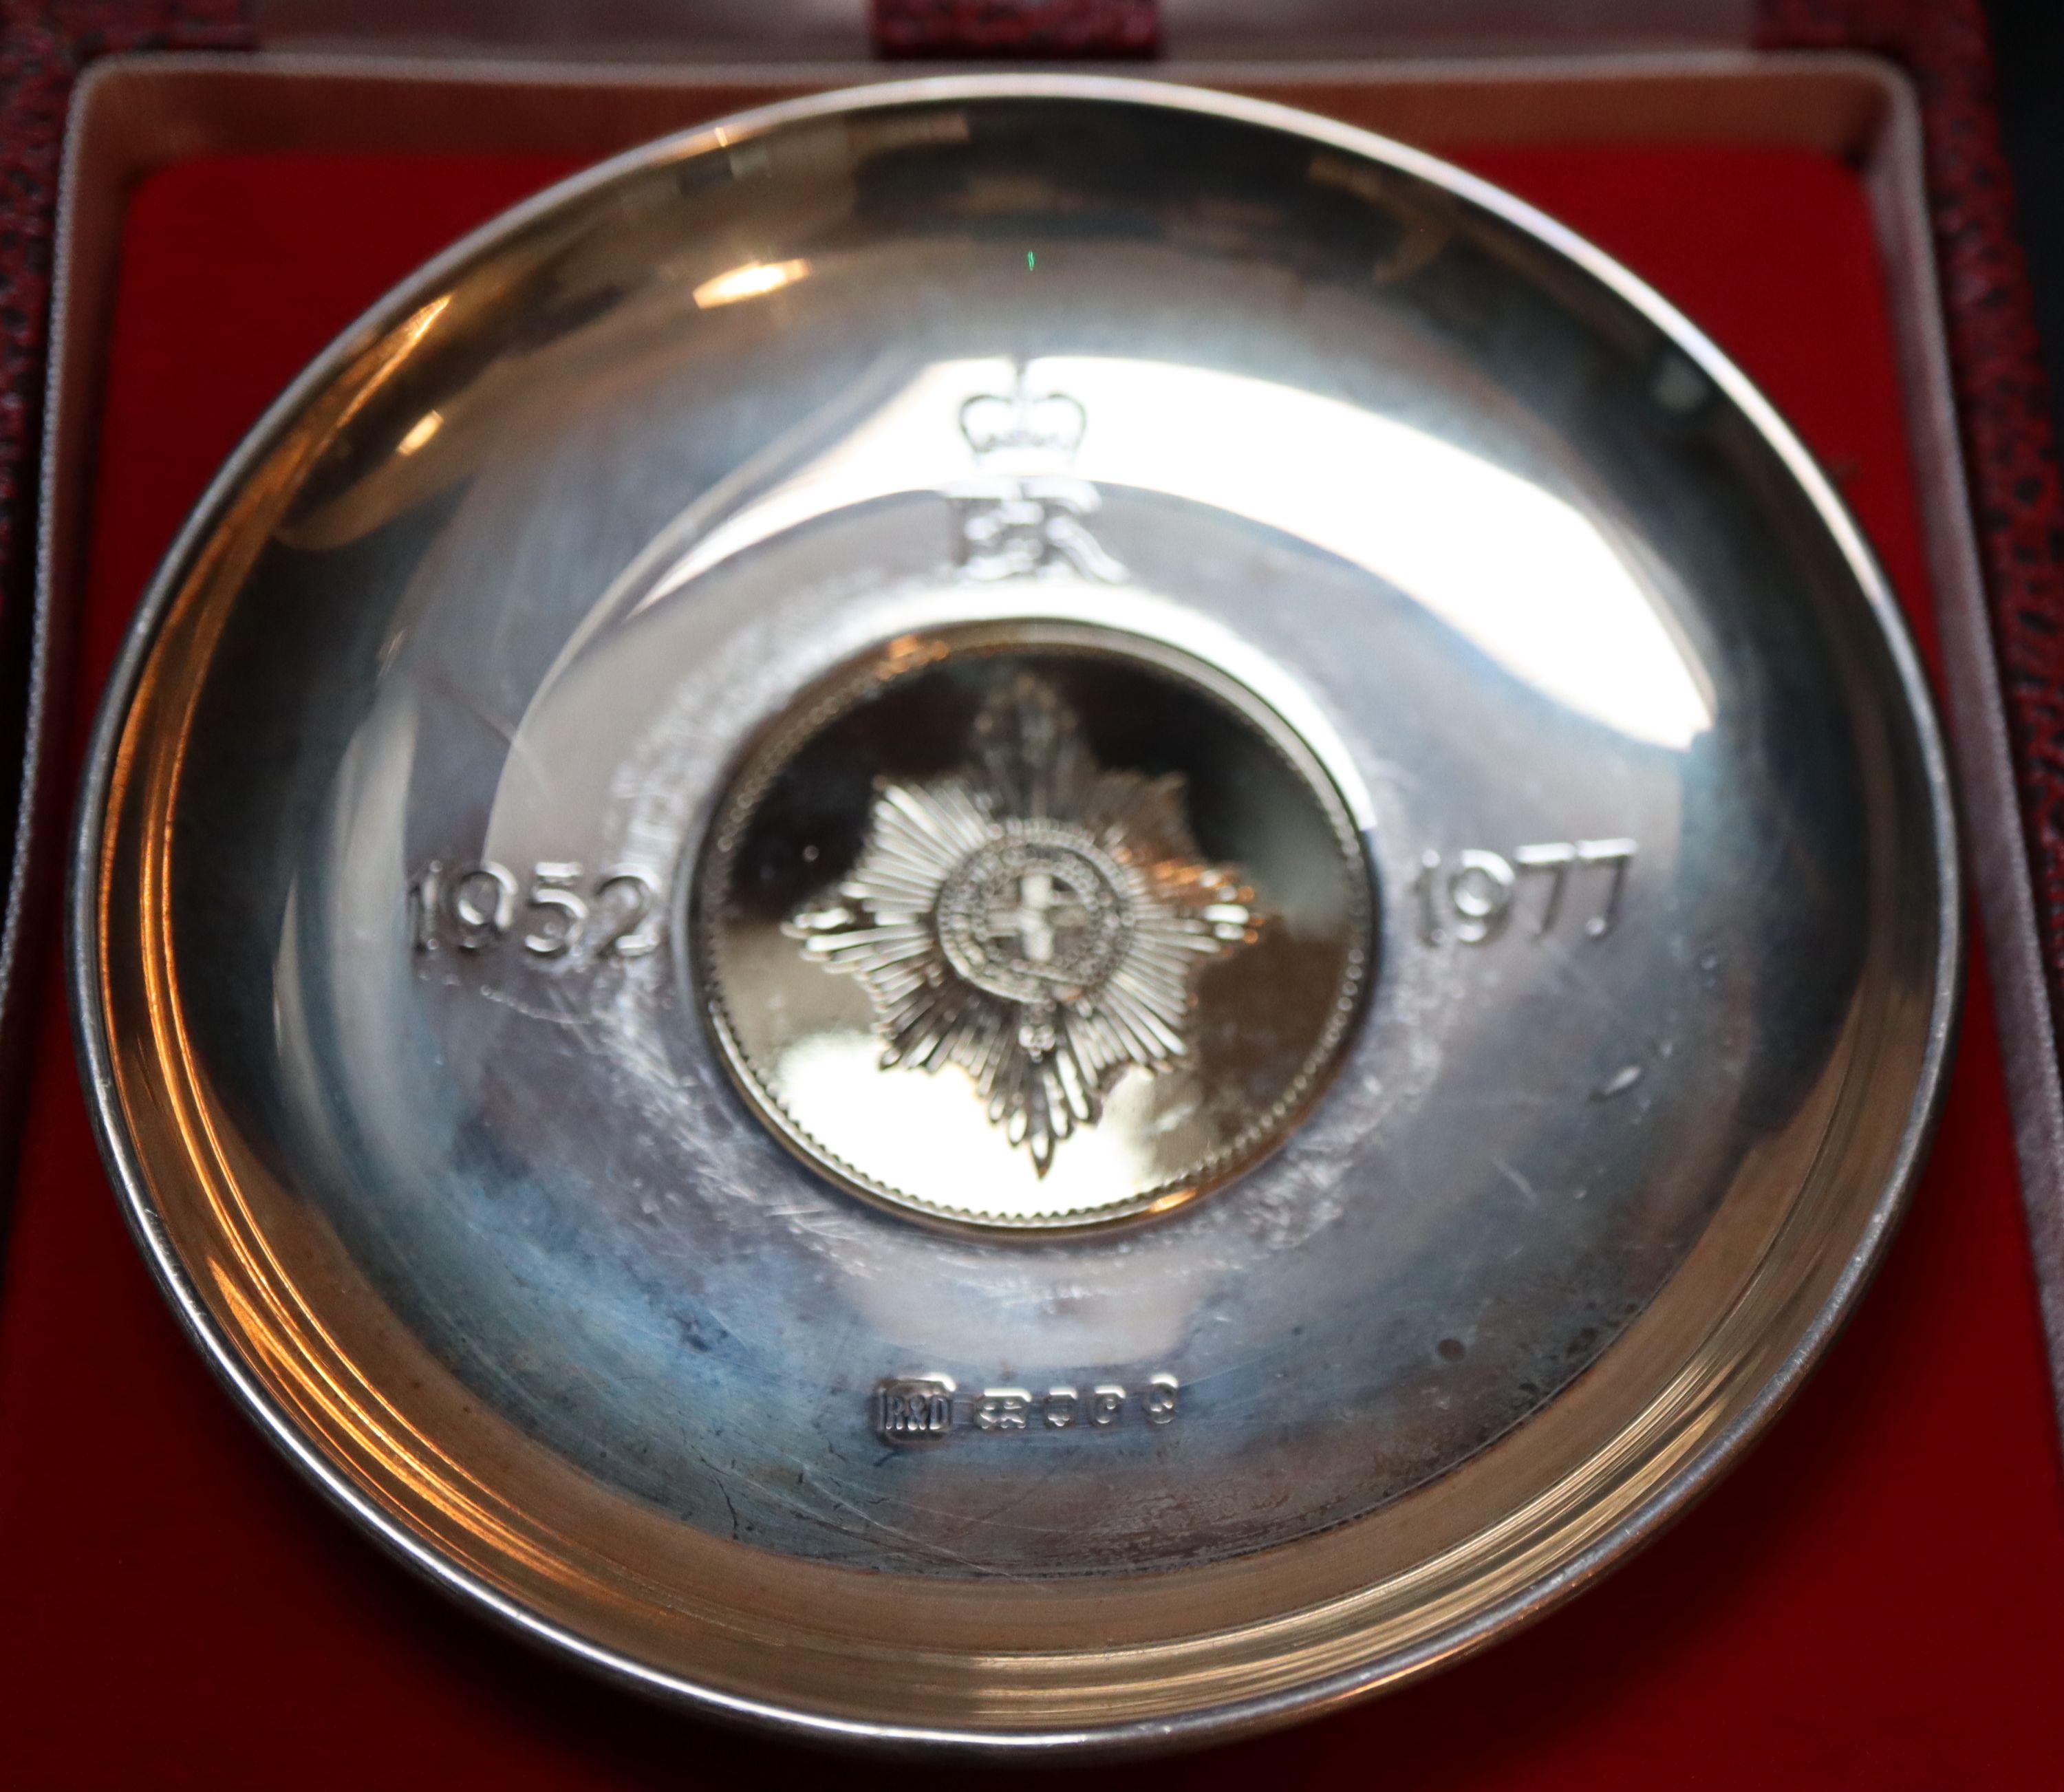 A Queen Elizabeth Silver Jubilee Coldstream Guards commemorative silver armada dish, diameter 10.15cm, cased, gross 79 grams.